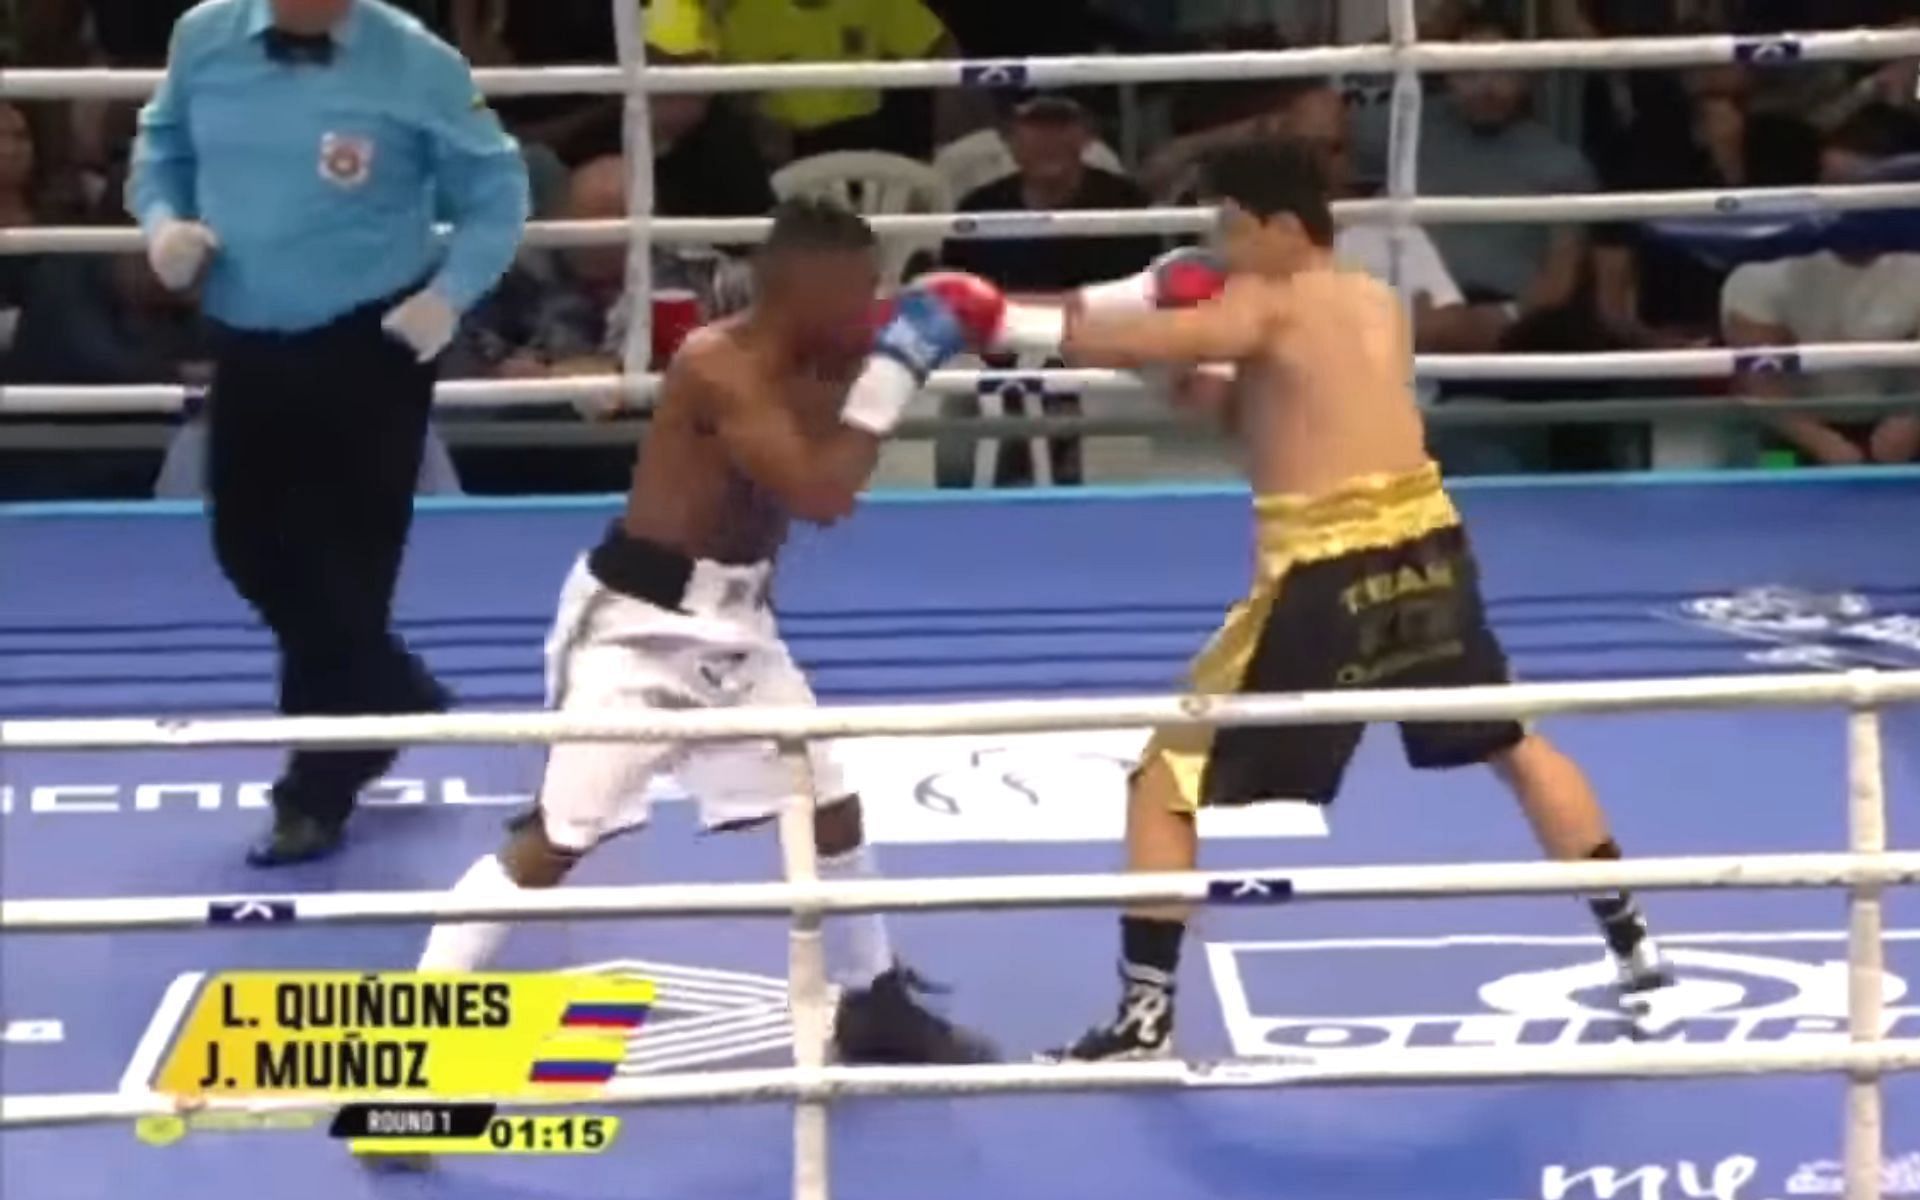 Luis Quinones vs Jose Munoz [Image courtesy: Box Luger via YouTube]